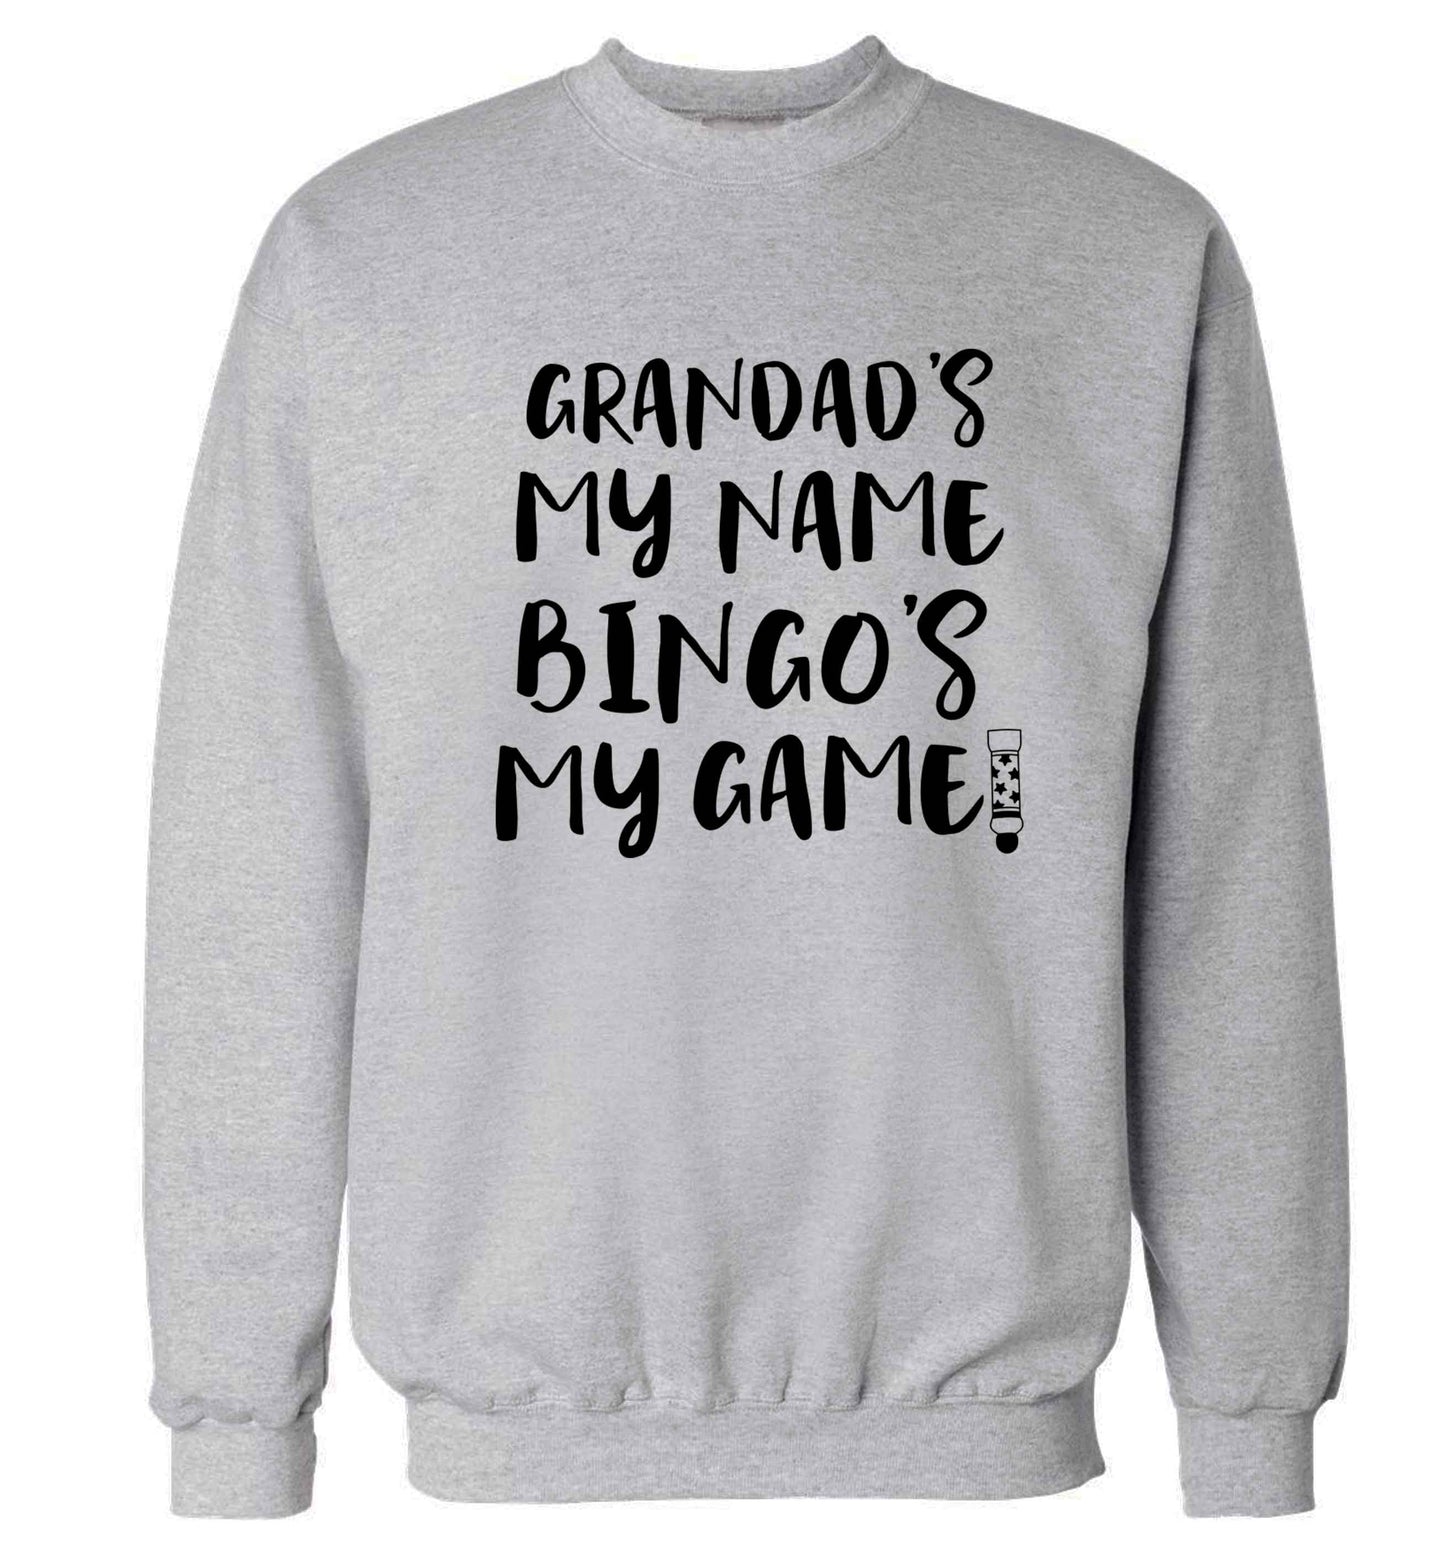 Grandad's my name bingo's my game! Adult's unisex grey Sweater 2XL